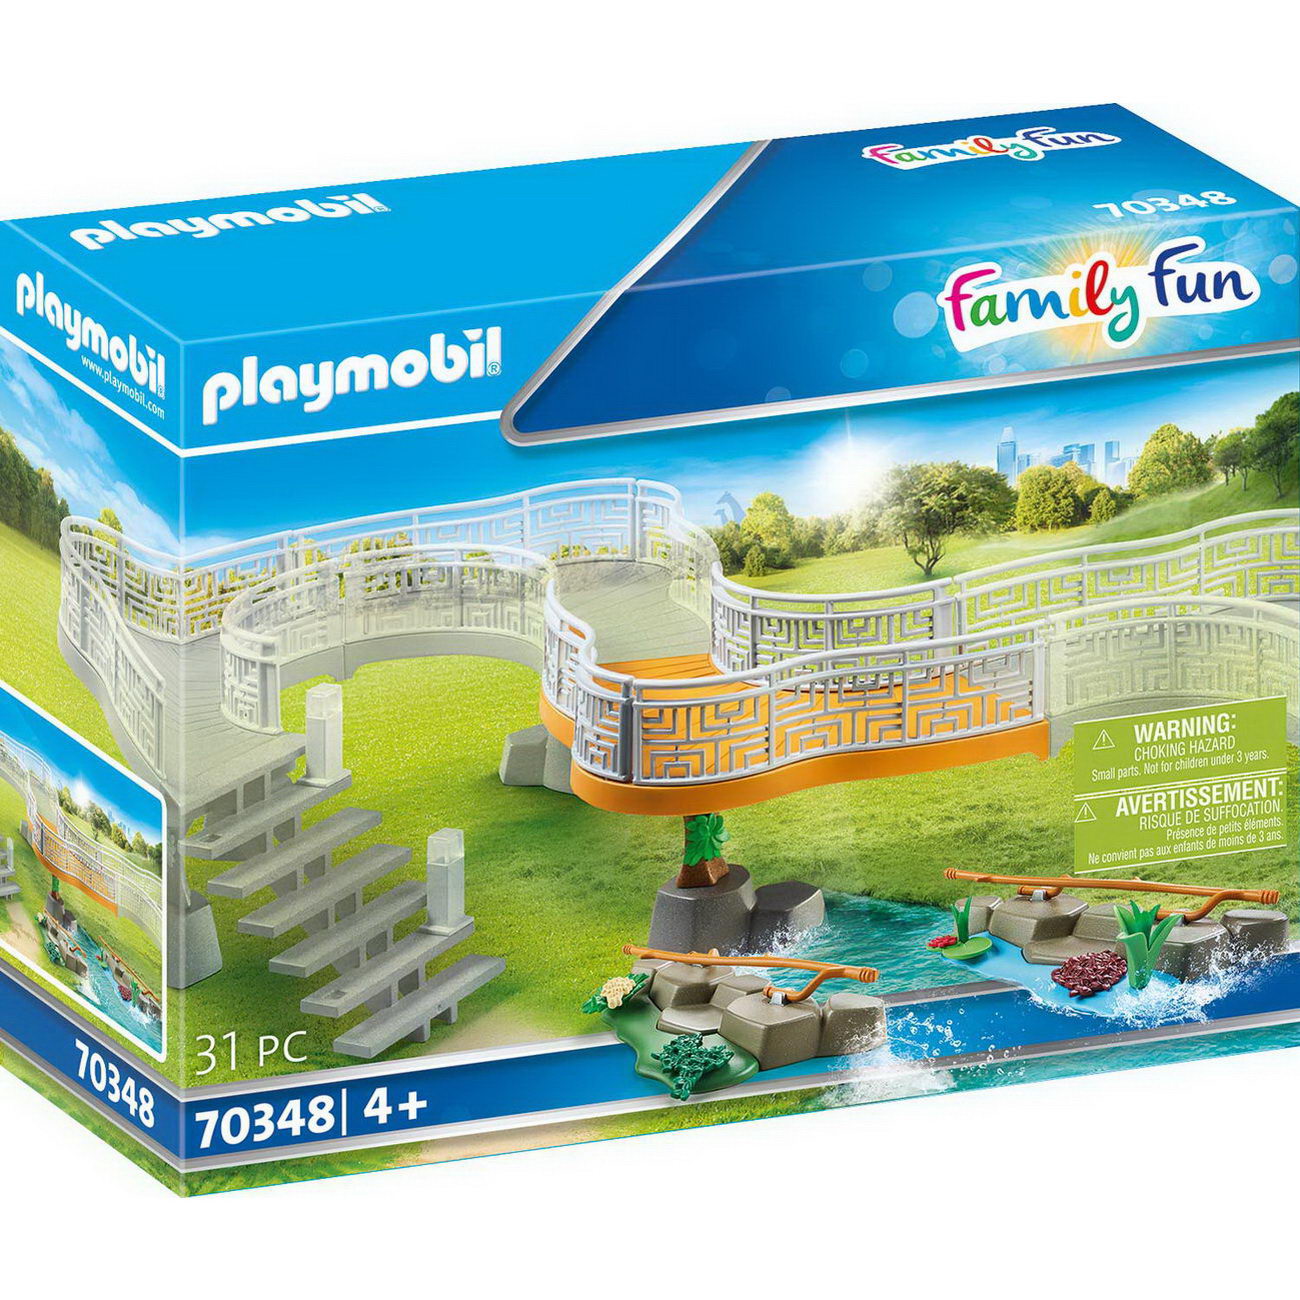 Playmobil 70348 - Erweiterungsset Erlebnis-Zoo - Family Fun